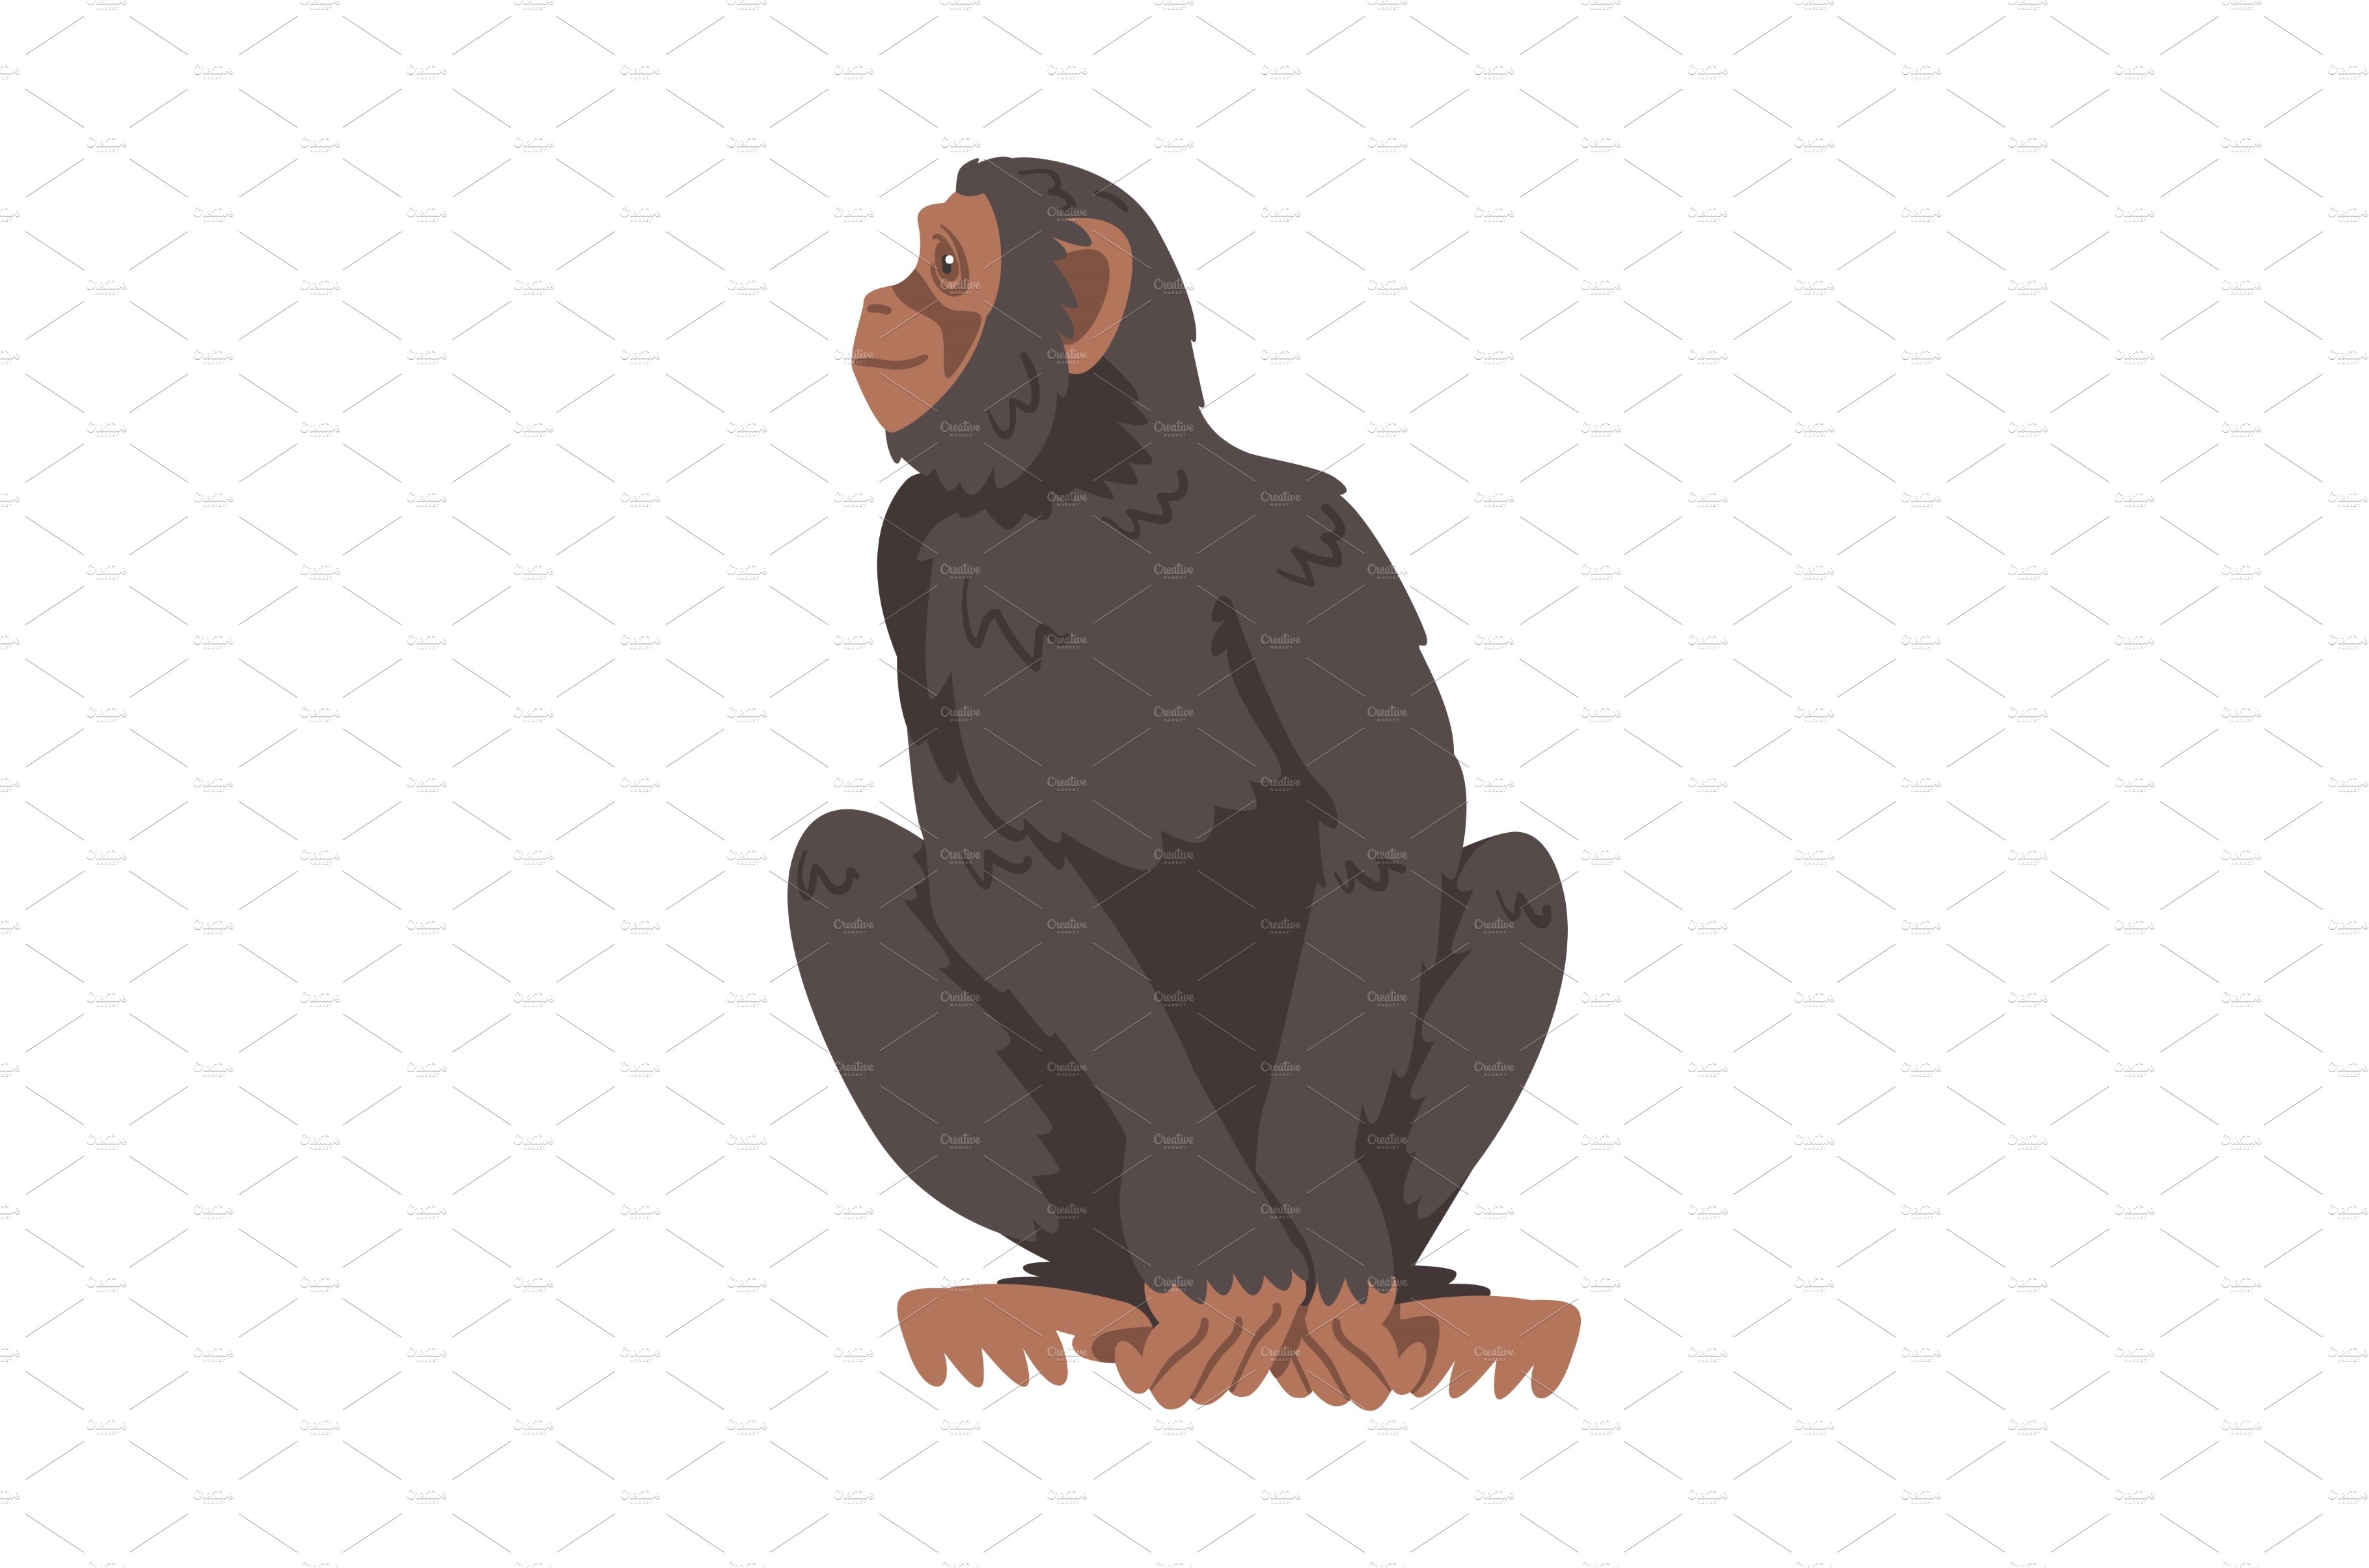 Chimpanzee Monkey as Great Ape cover image.